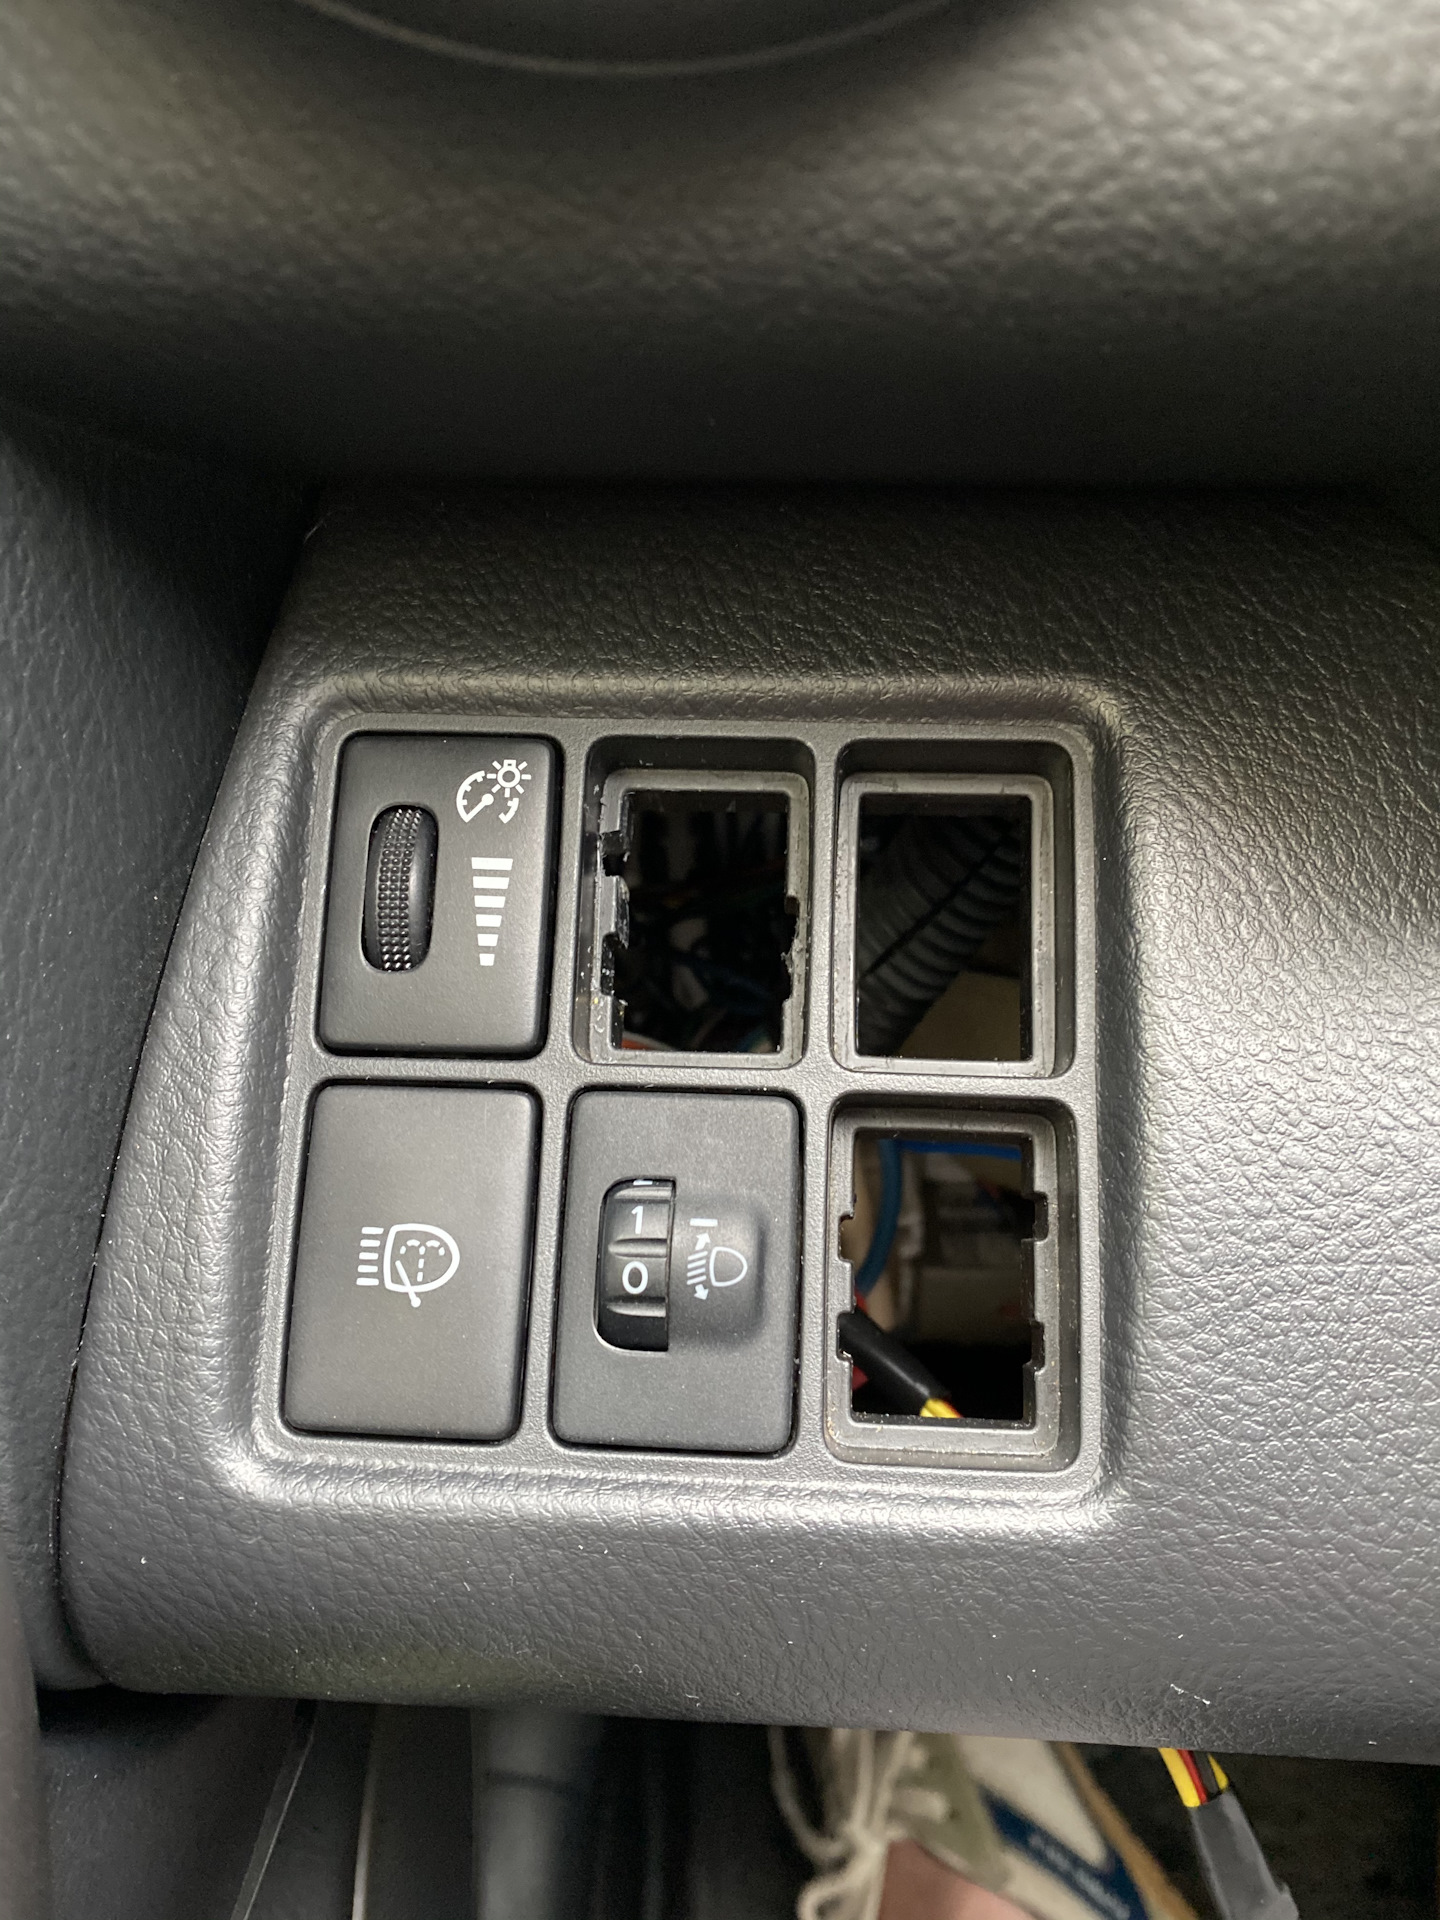 Рав 4 кнопку. TRC кнопка в Тойота рав 4. Кнопки Toyota rav4. Рав 4 кнопка ESP. Кнопка для Тойота рав 4.